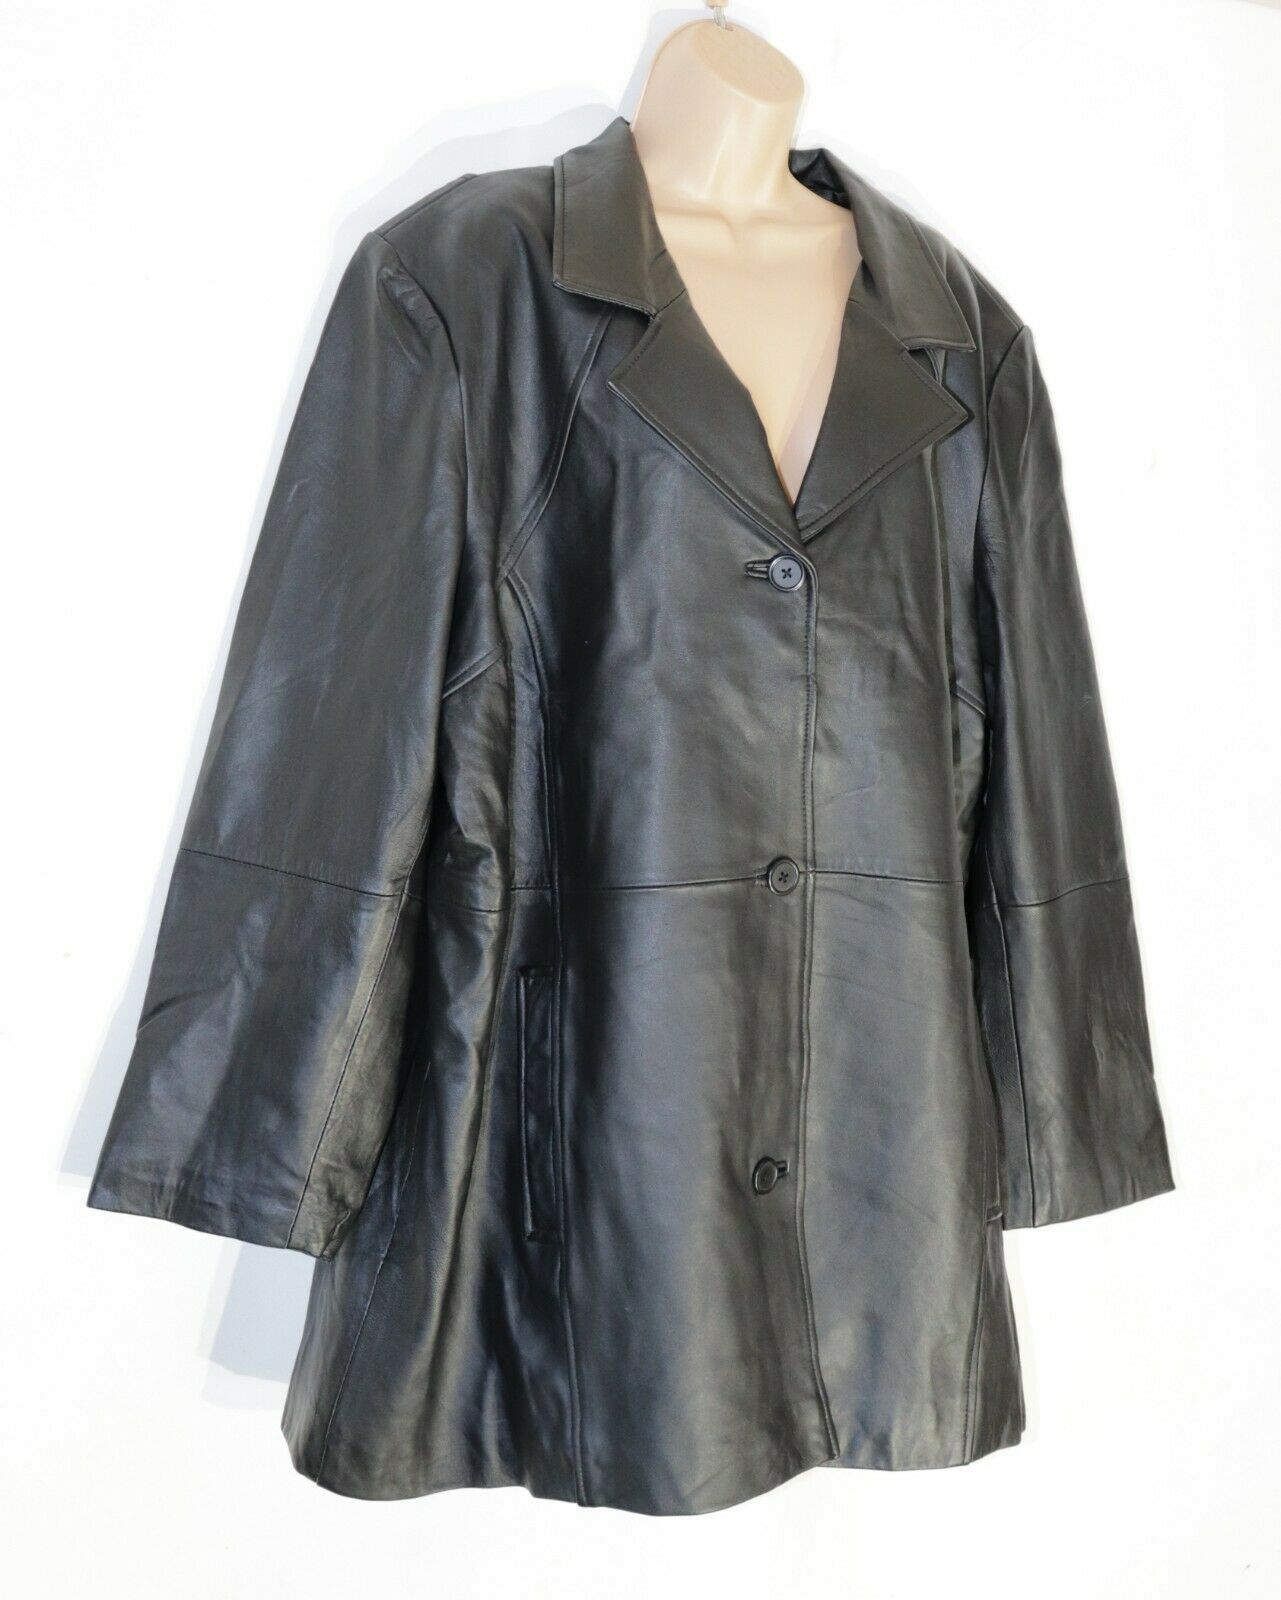 Women's Vintage CHARLES KLEIN Hip Black 100% Real Leather Jacket Coat ...